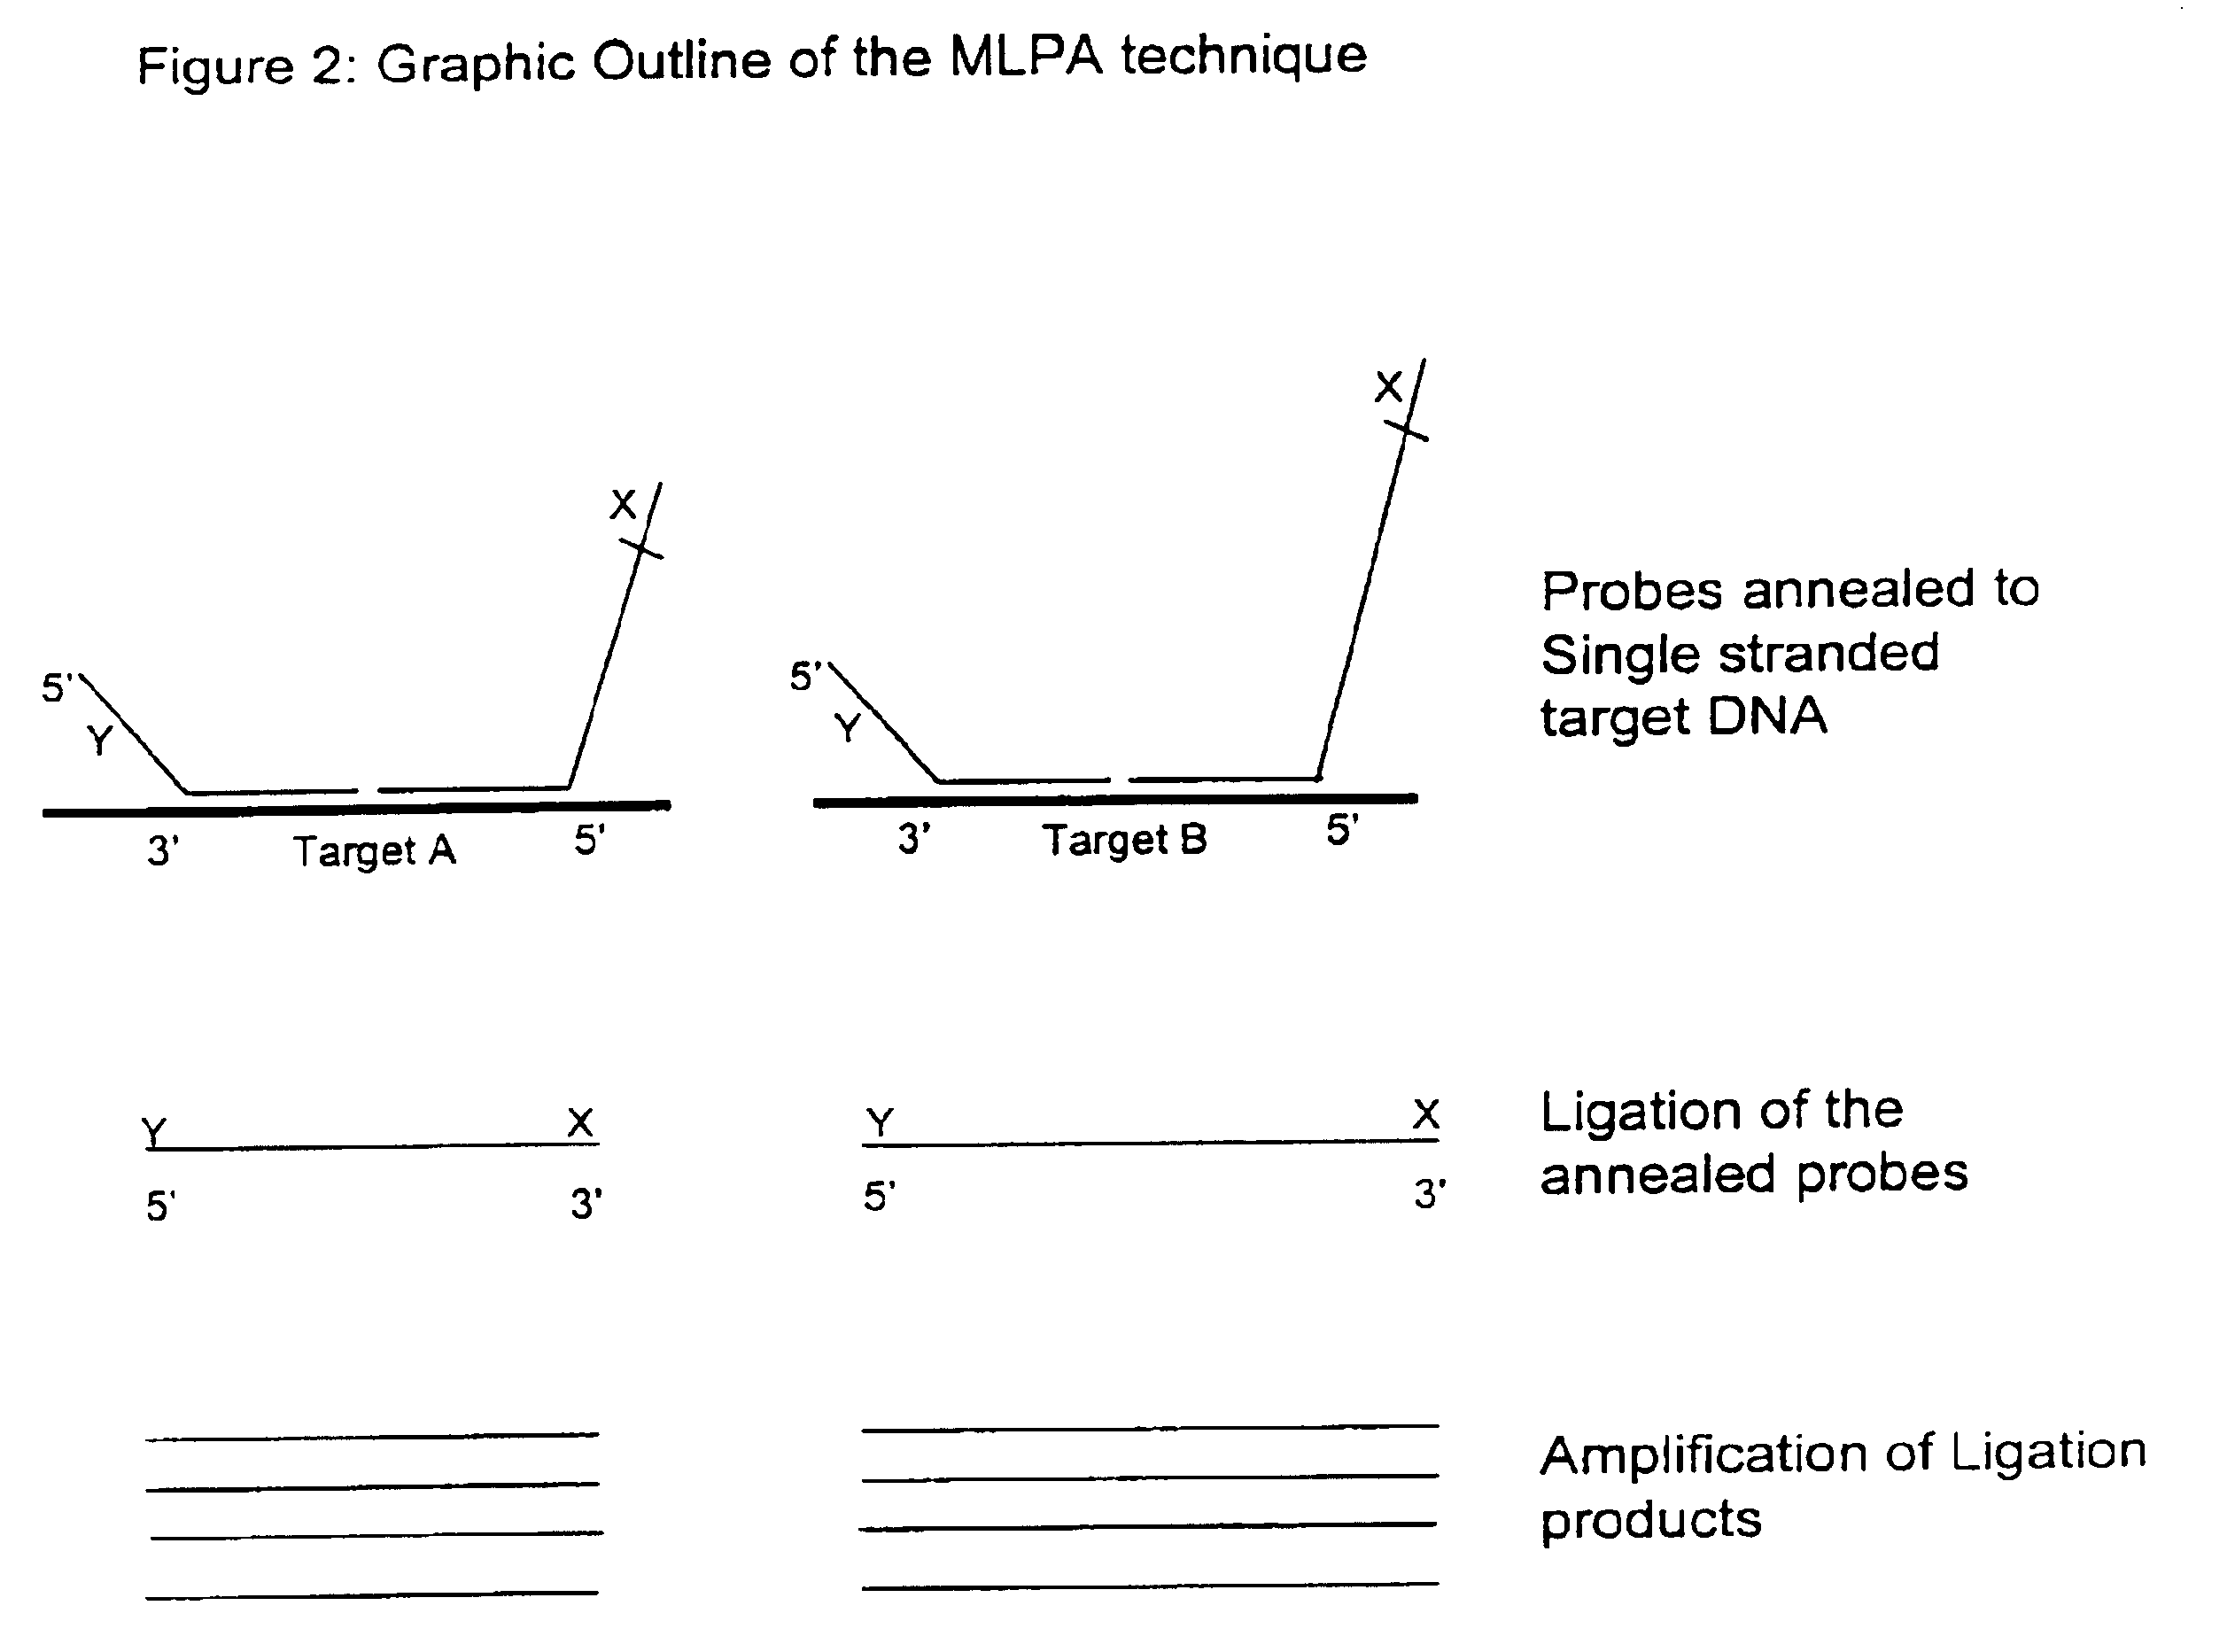 Multiplex ligatable probe amplification